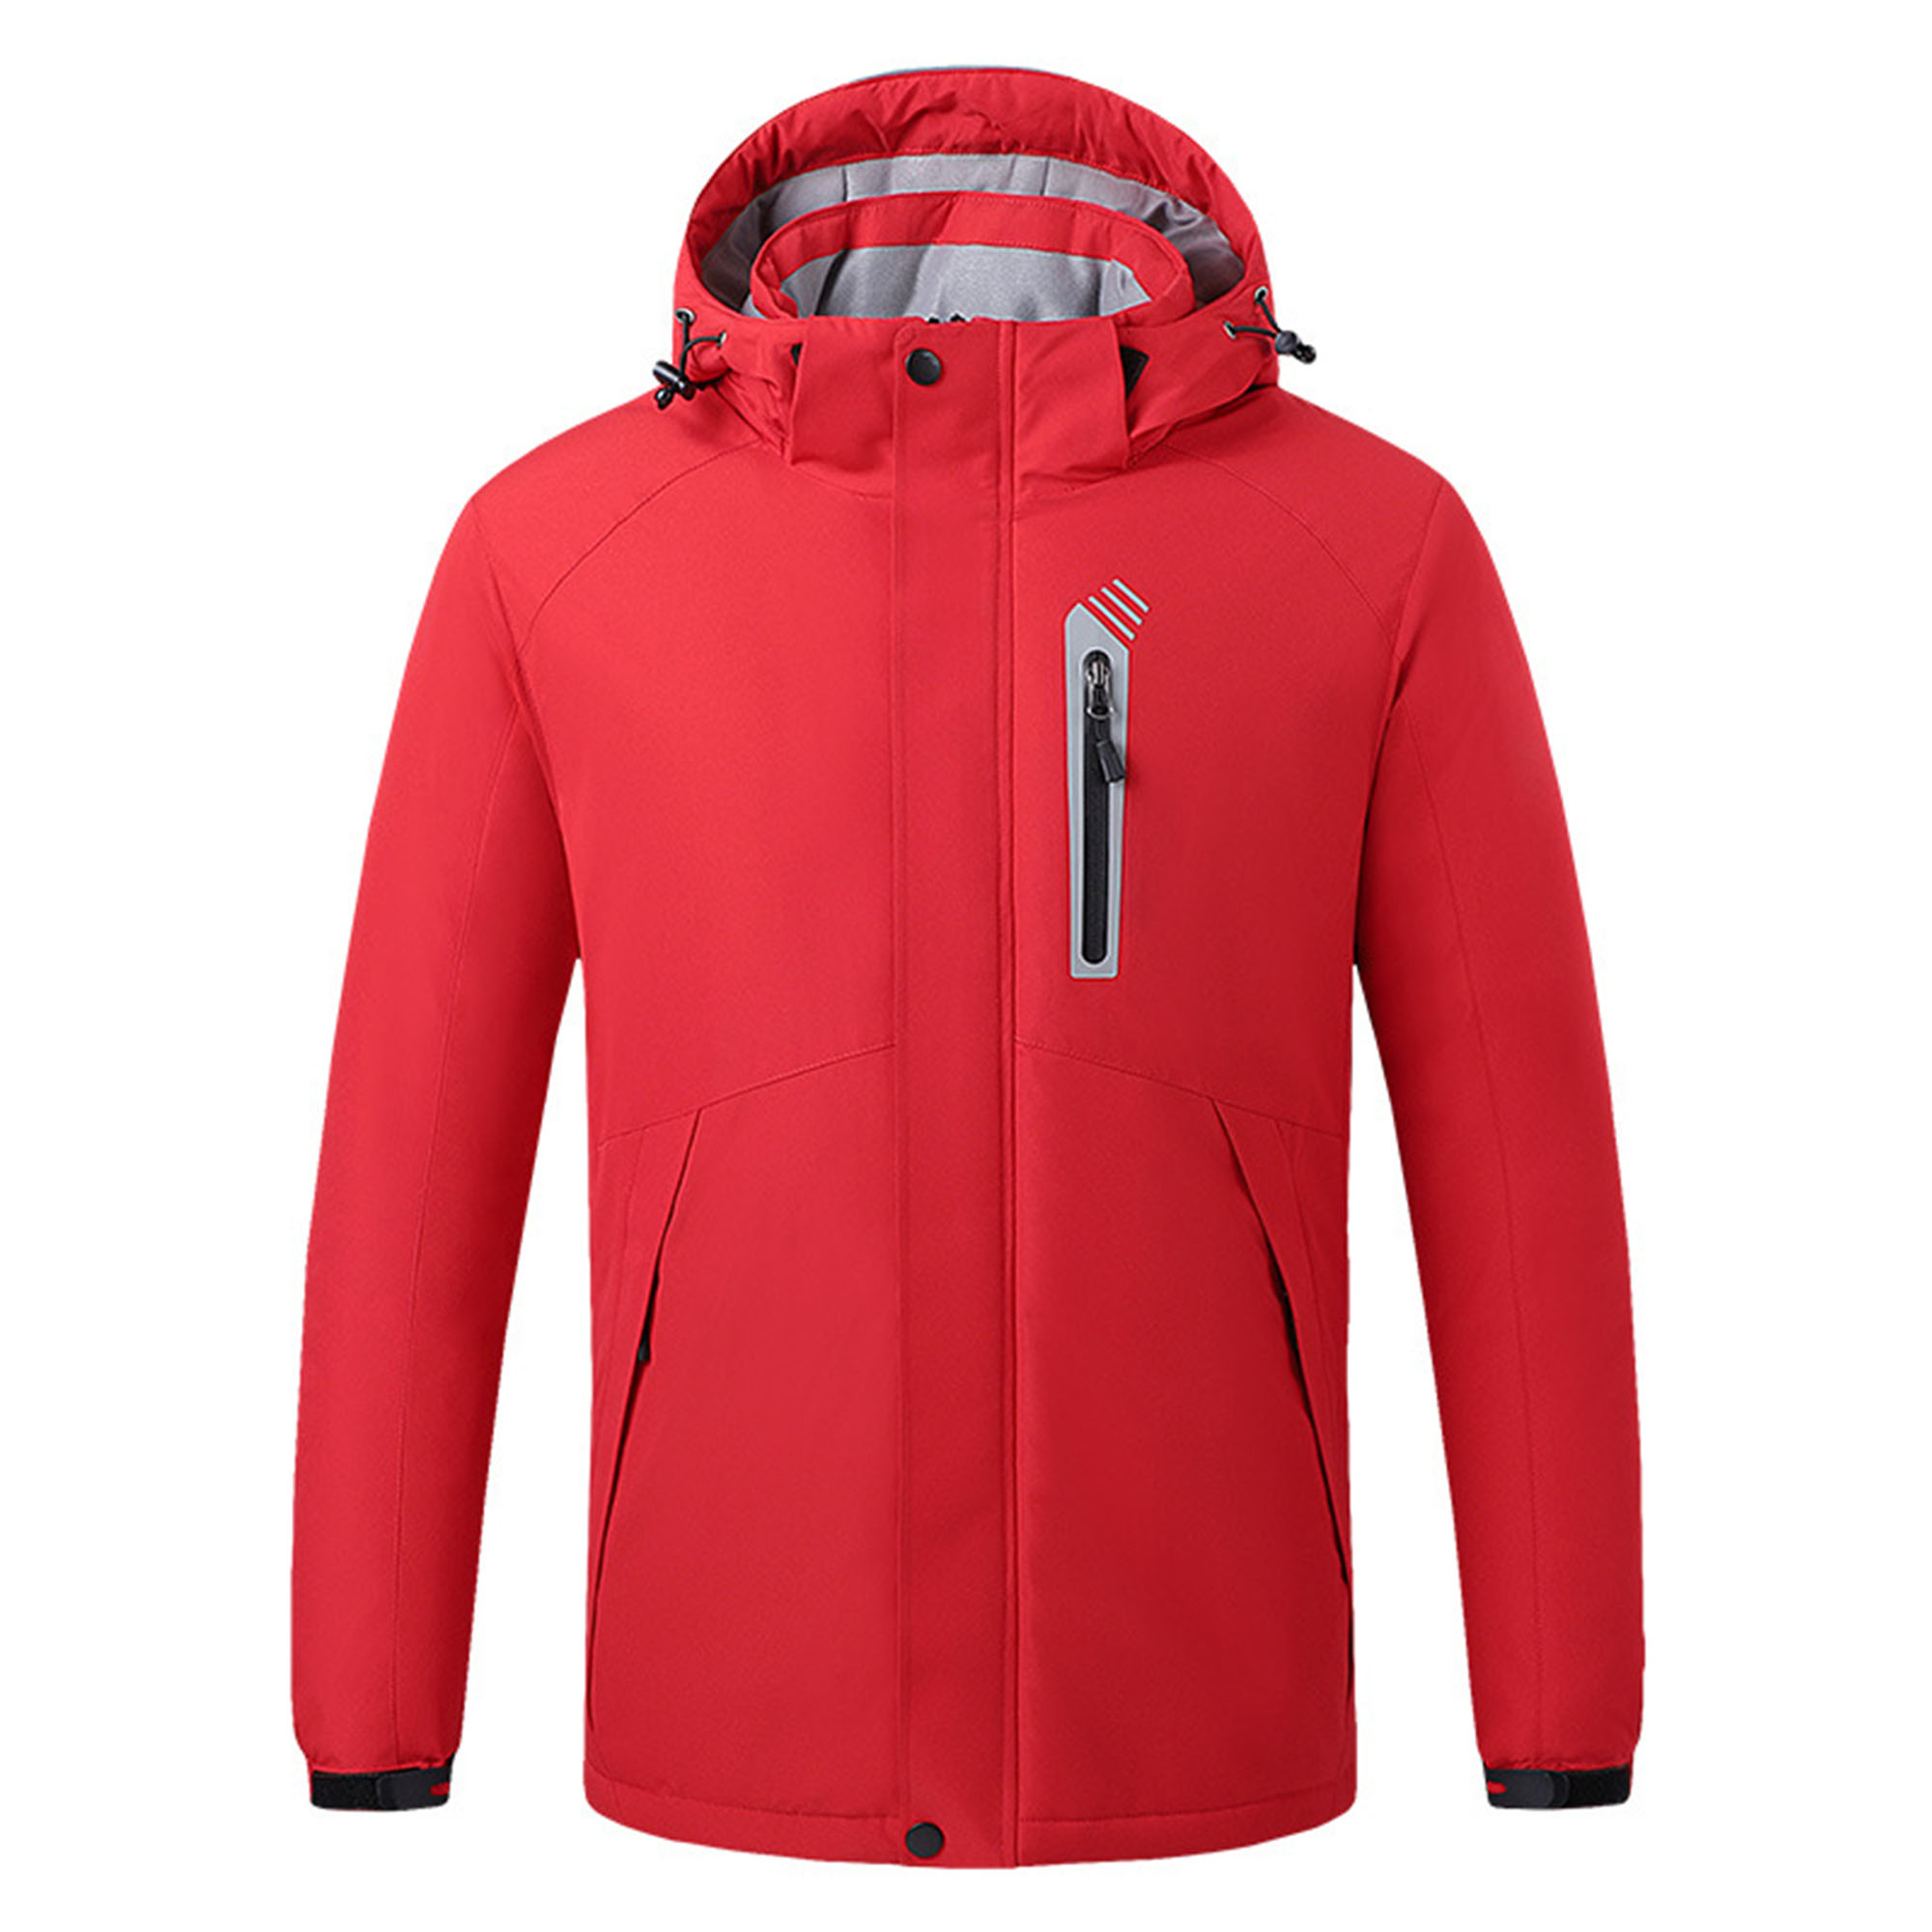 CVLIFE Men's Heated Jacket Full Zip with Detachable Hood (Power Bank is Not Included) Winter Body Warmer Unisex Women Lightweight Heating Coat Clothing - image 1 of 3